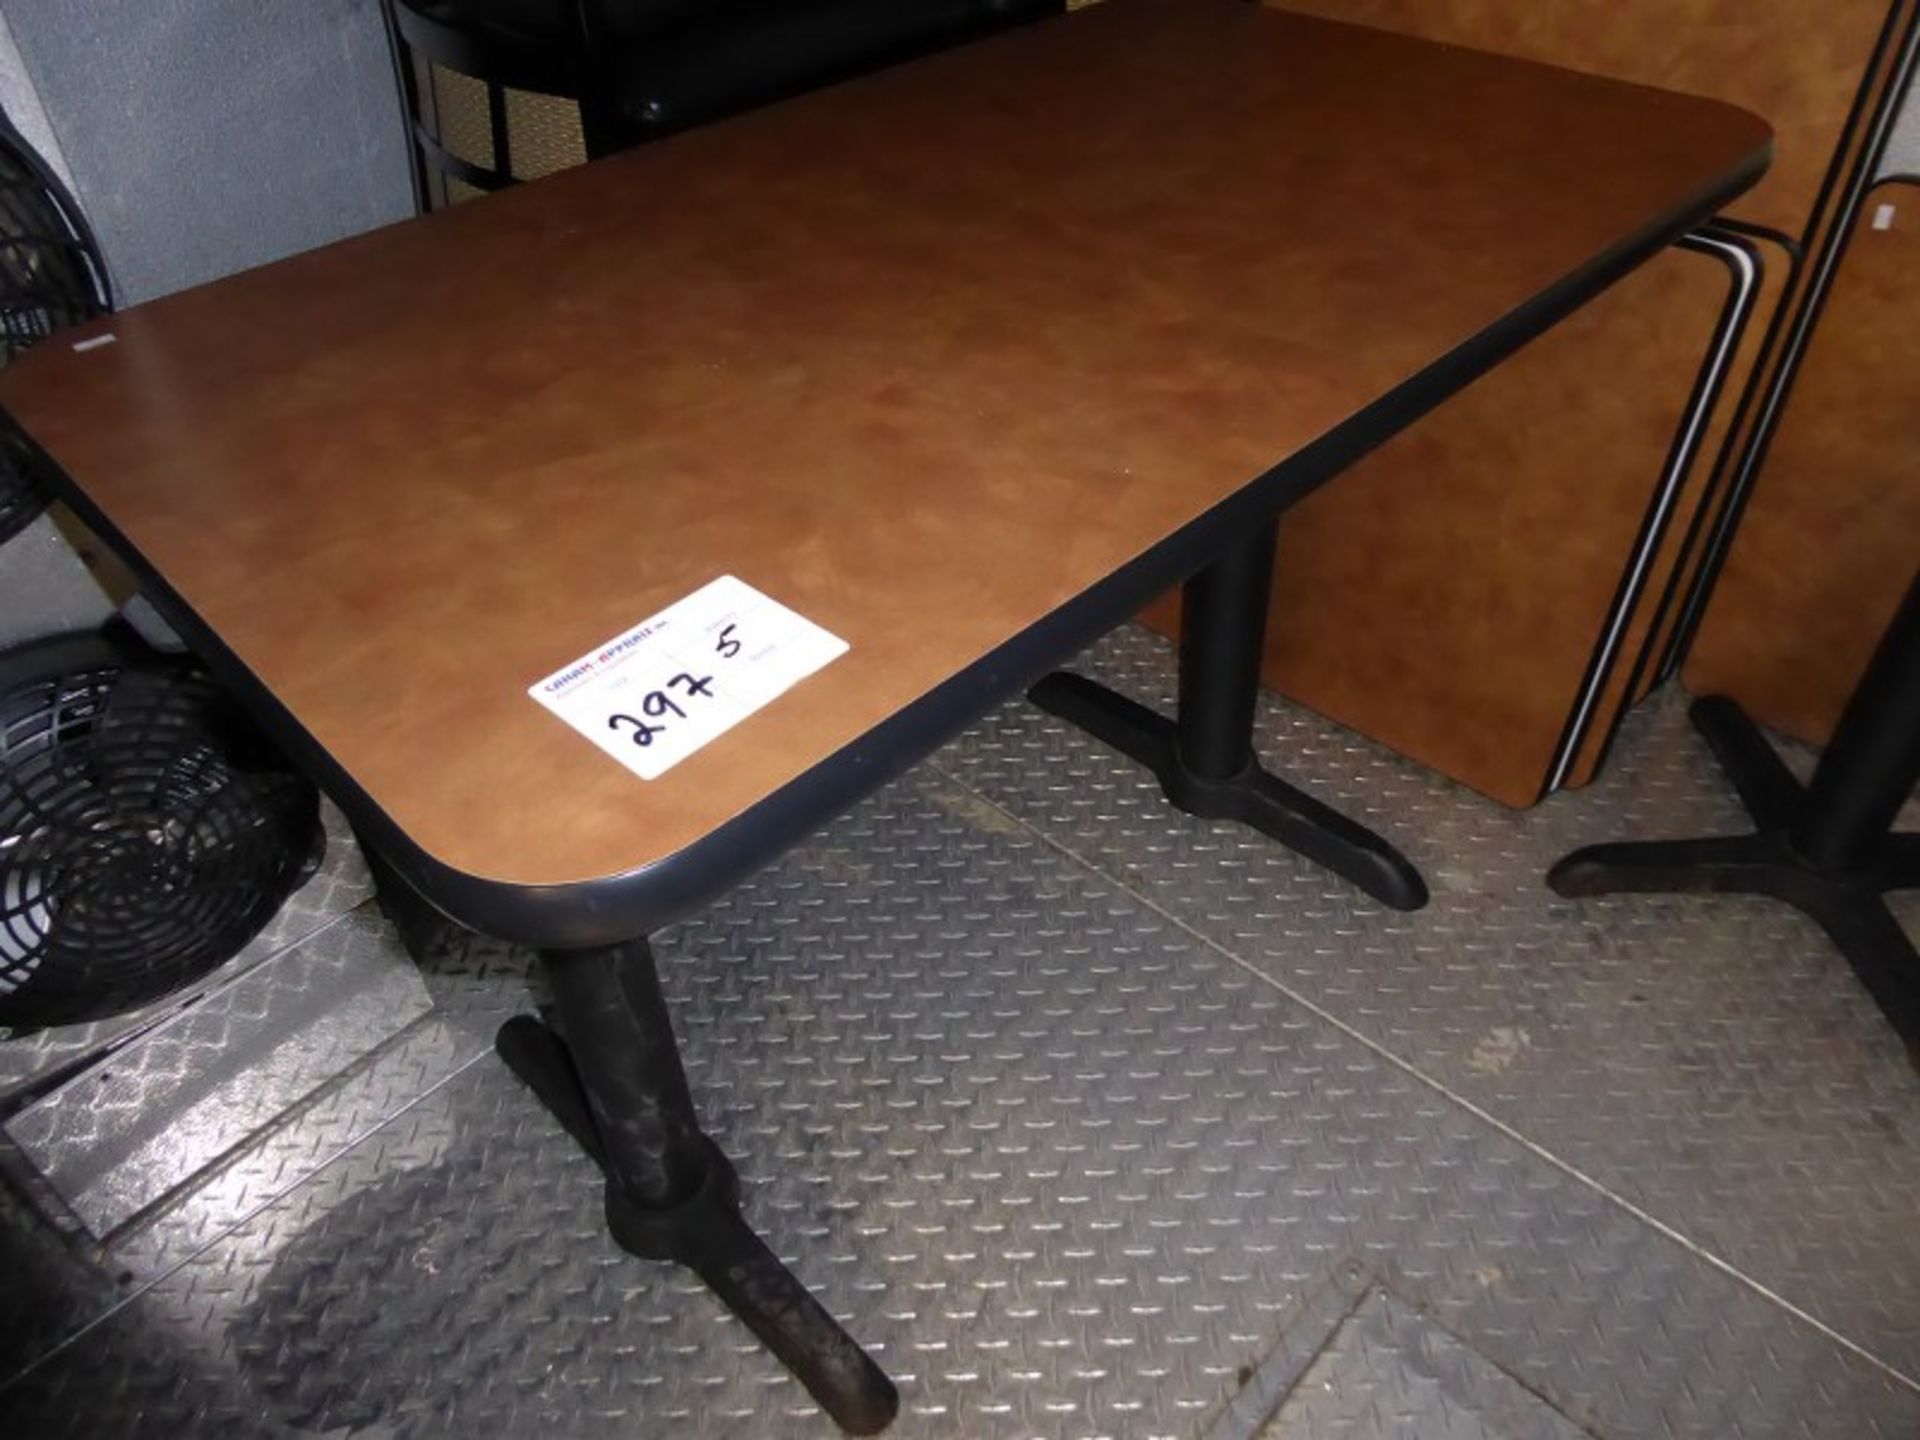 42" X 24" RESTAURANT TABLE W/ LEGS - 9PCS